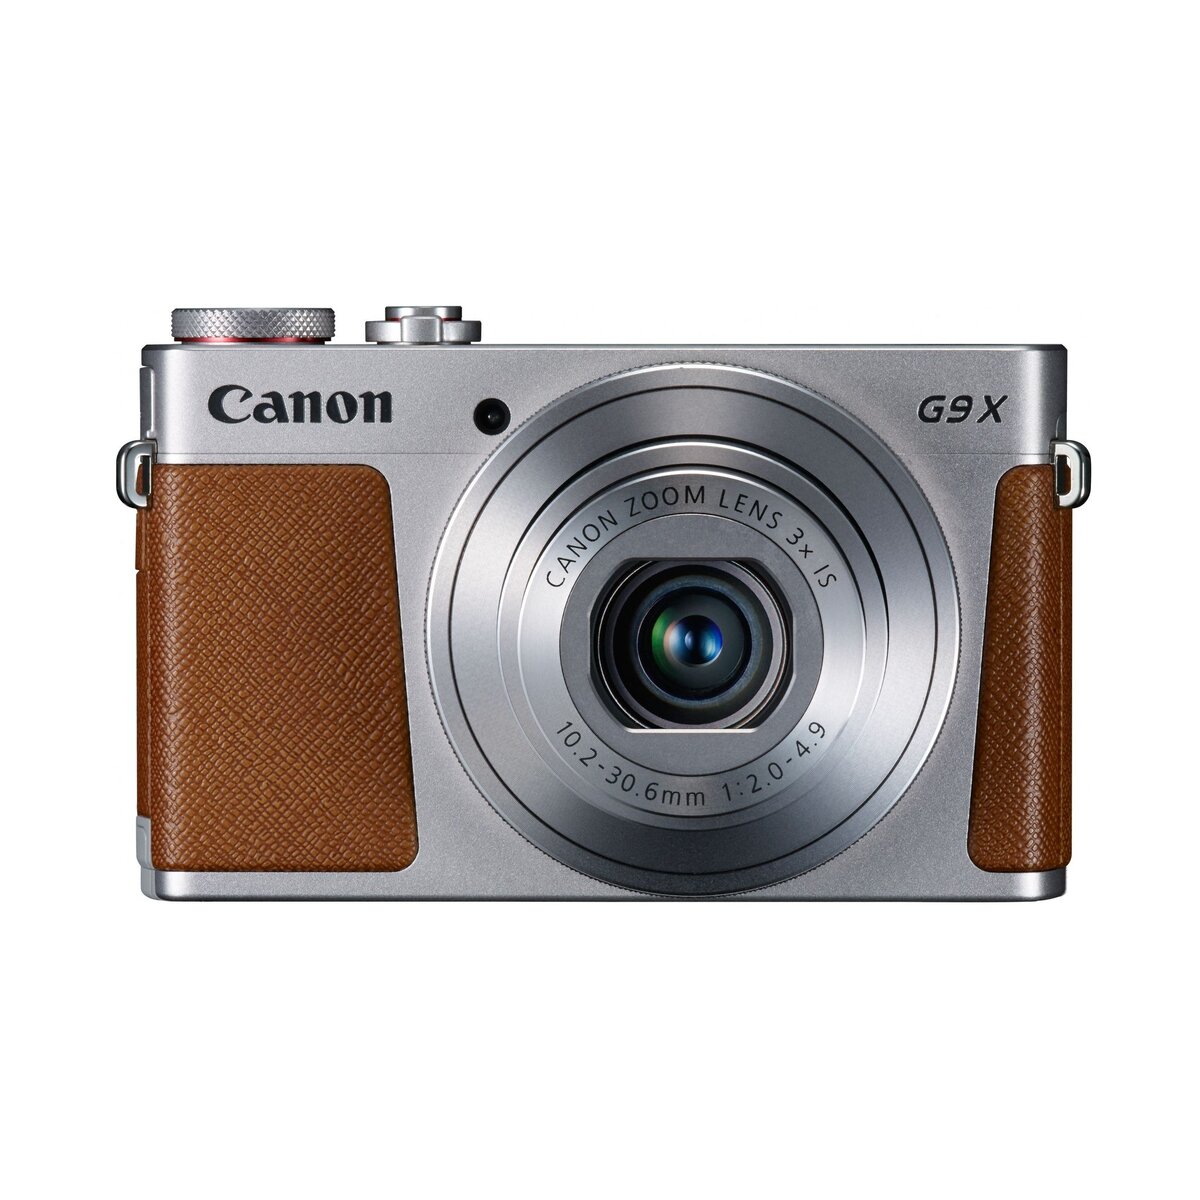 CANON Appareil Photo Compact - Powershot G9 X - Argent + Objectif 10.2-30.6 mm